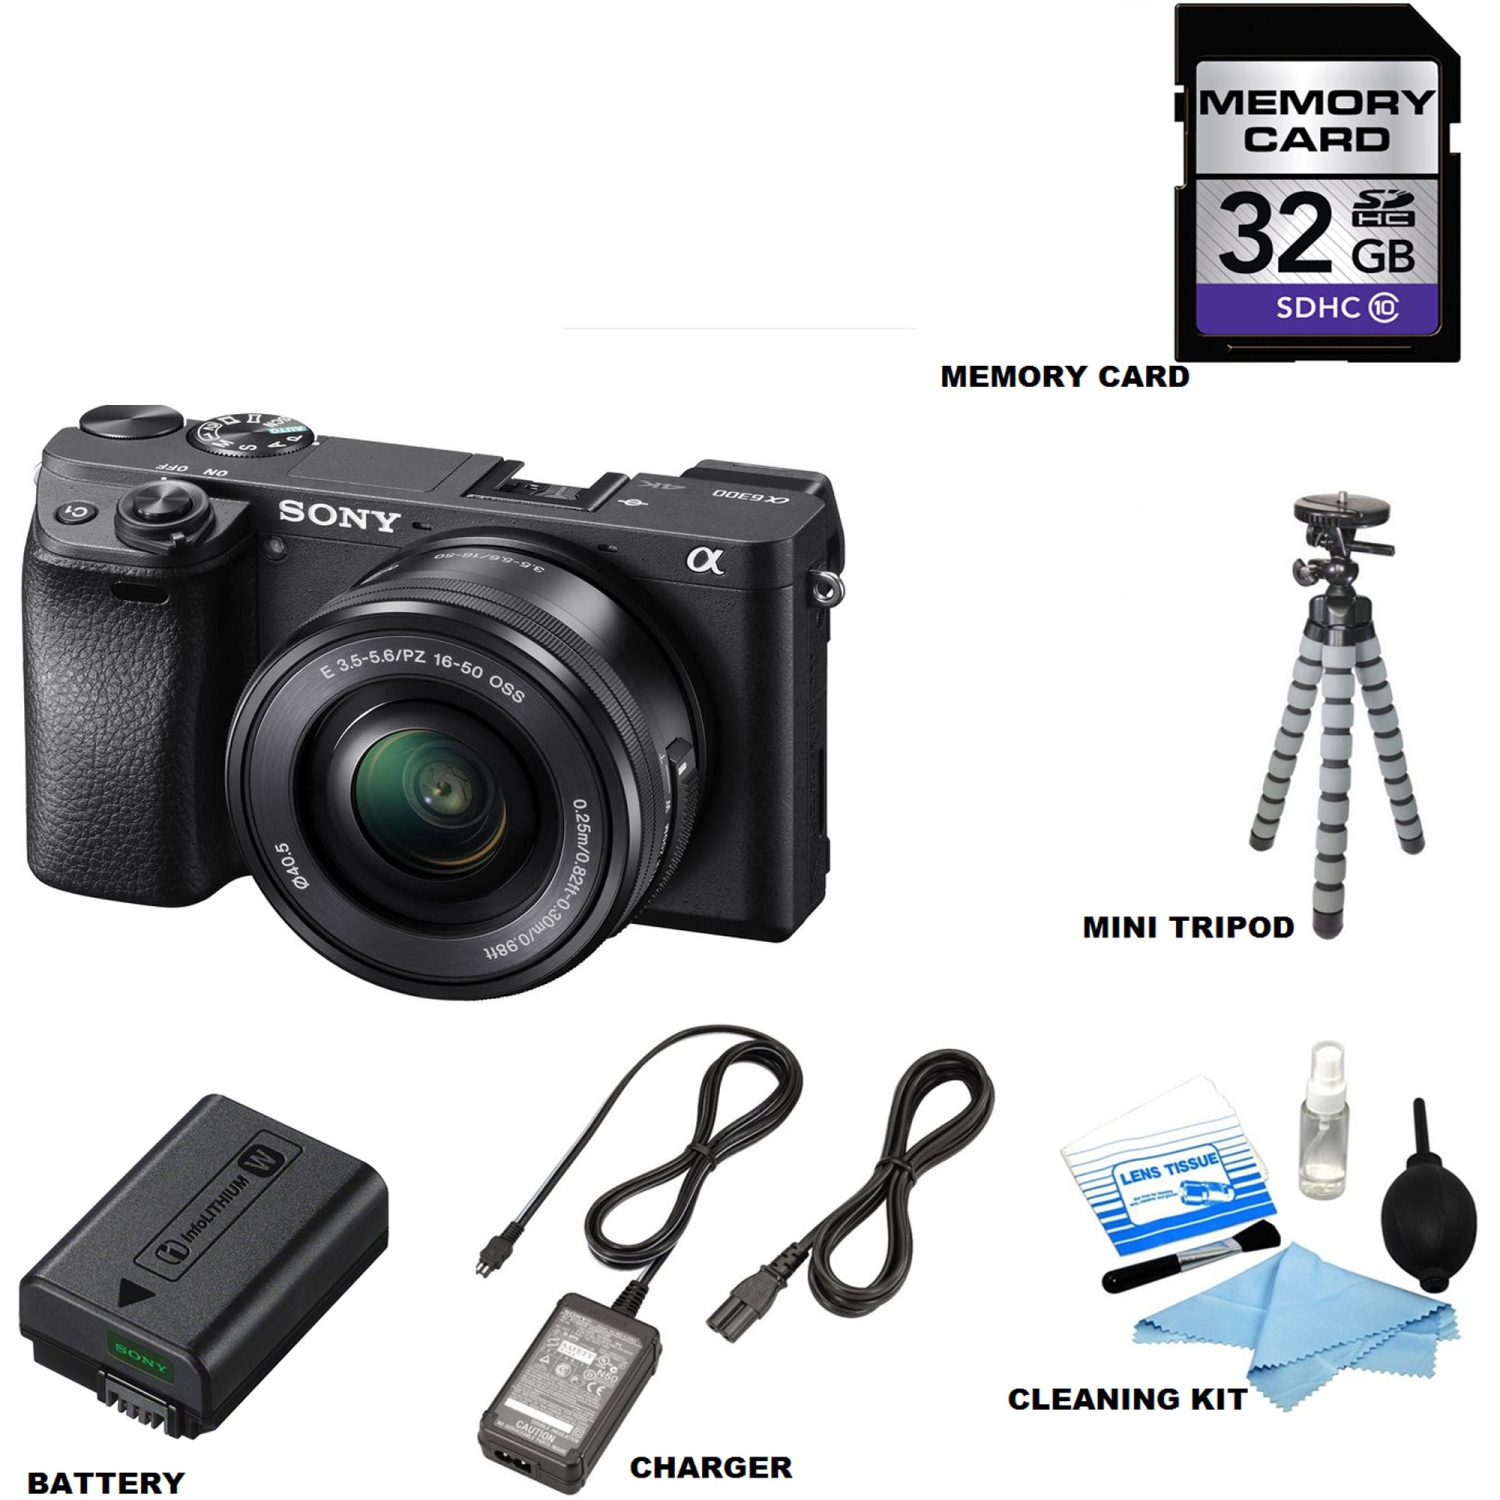 Sony Alpha a6300 Mirrorless Digital Camera with 16-50mm Lens USA - US Version w/ Seller Warranty